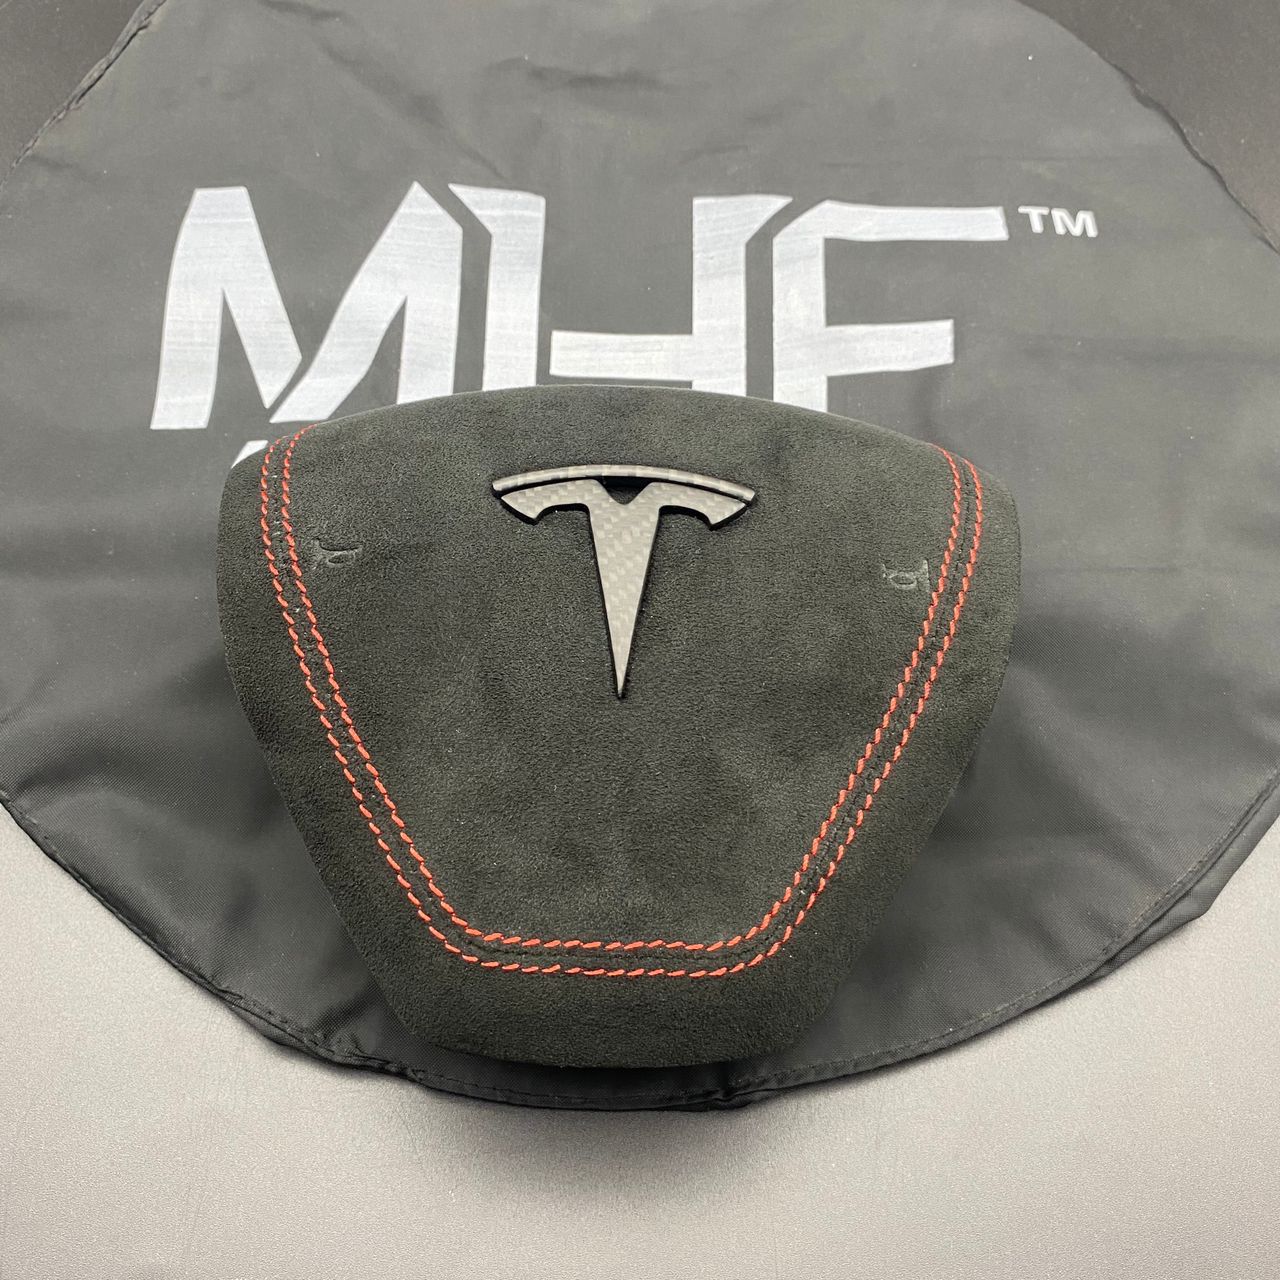 Tesla Alcantara Custom Wrapped Airbag